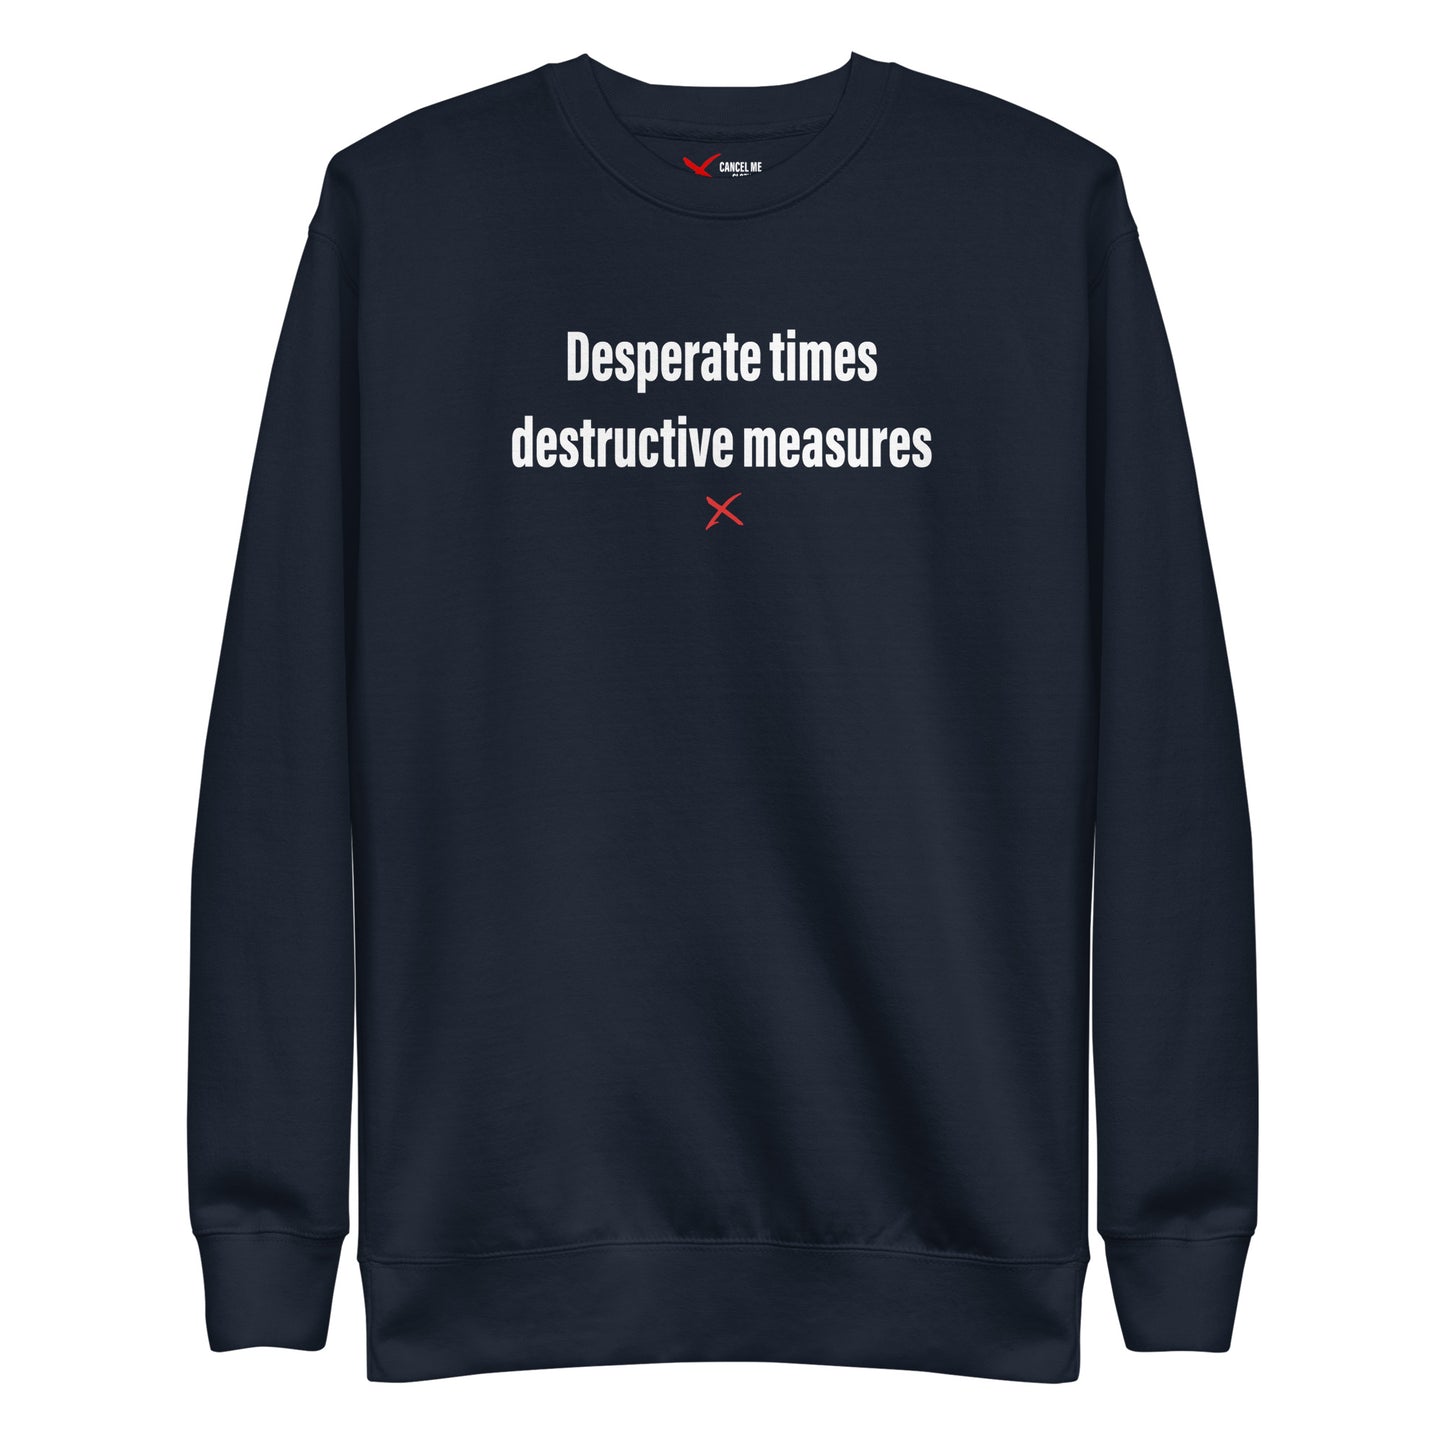 Desperate times destructive measures - Sweatshirt